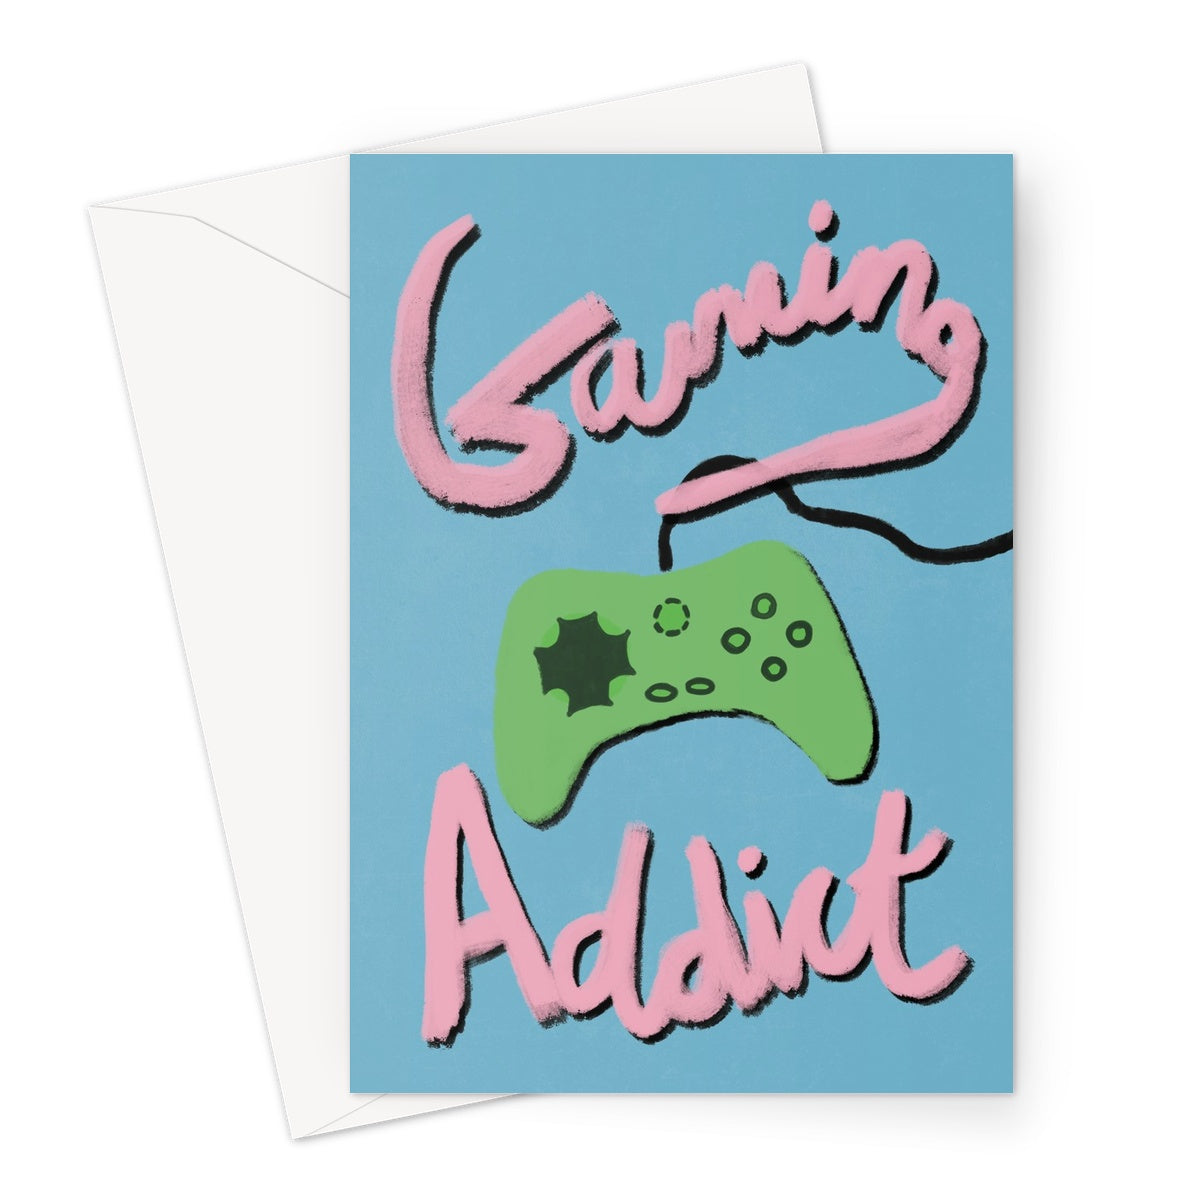 Gaming Addict Print - Blue, Pink, Green Greeting Card